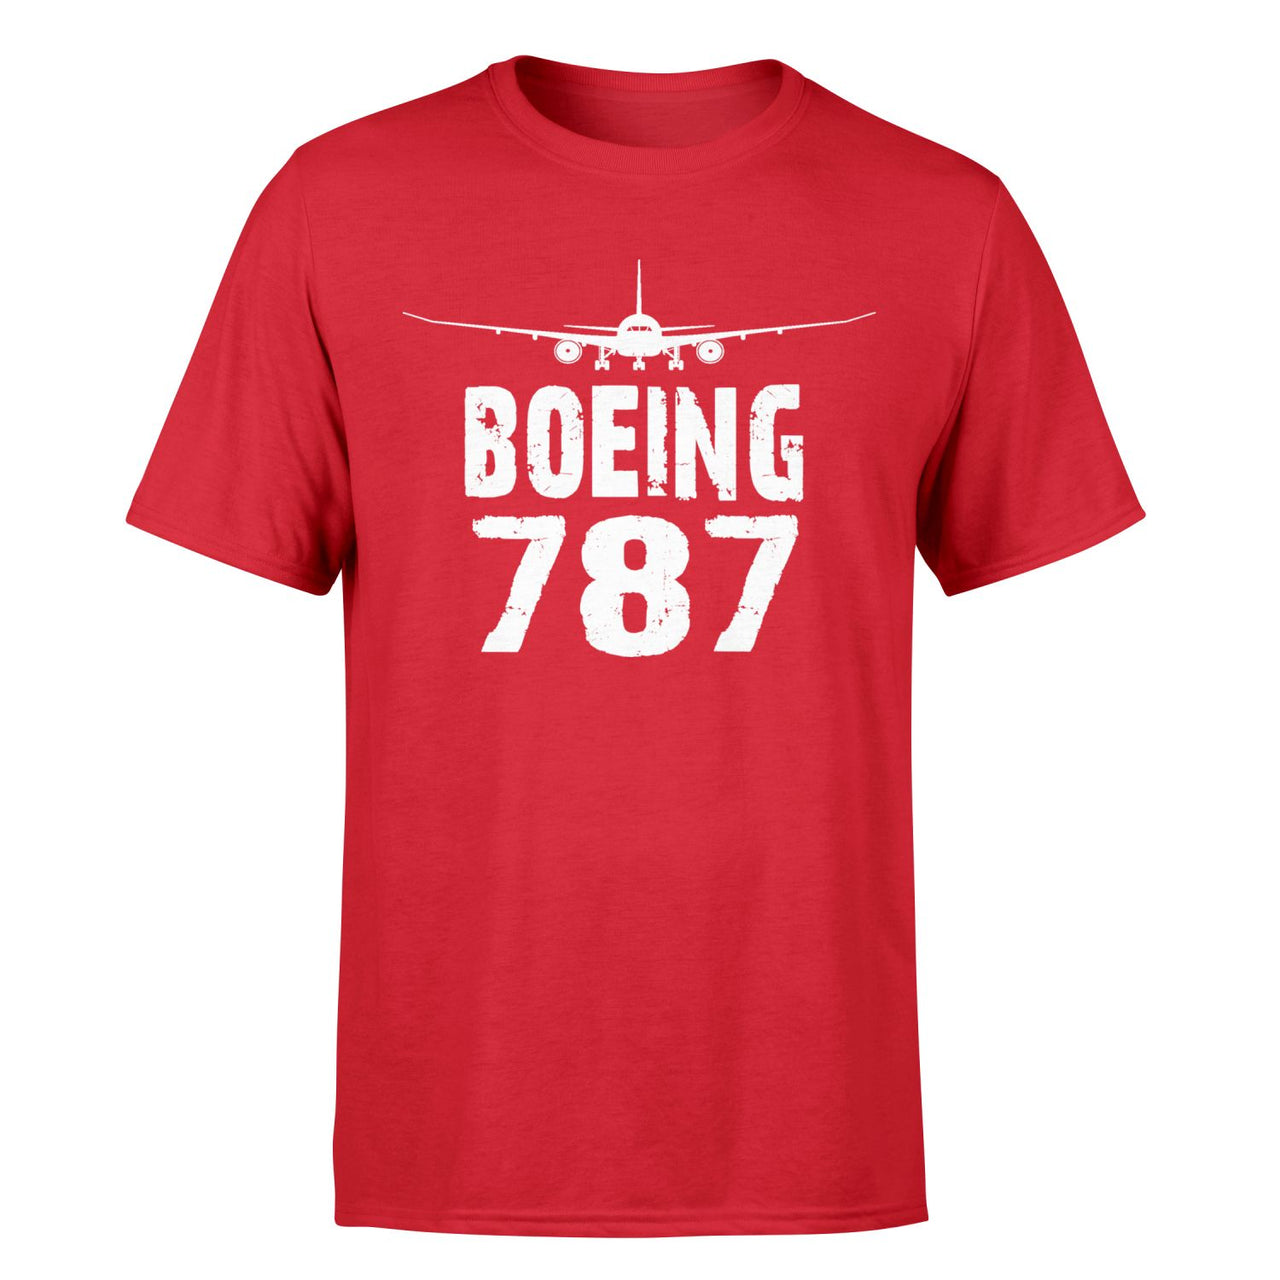 Boeing 787 & Plane Designed T-Shirts